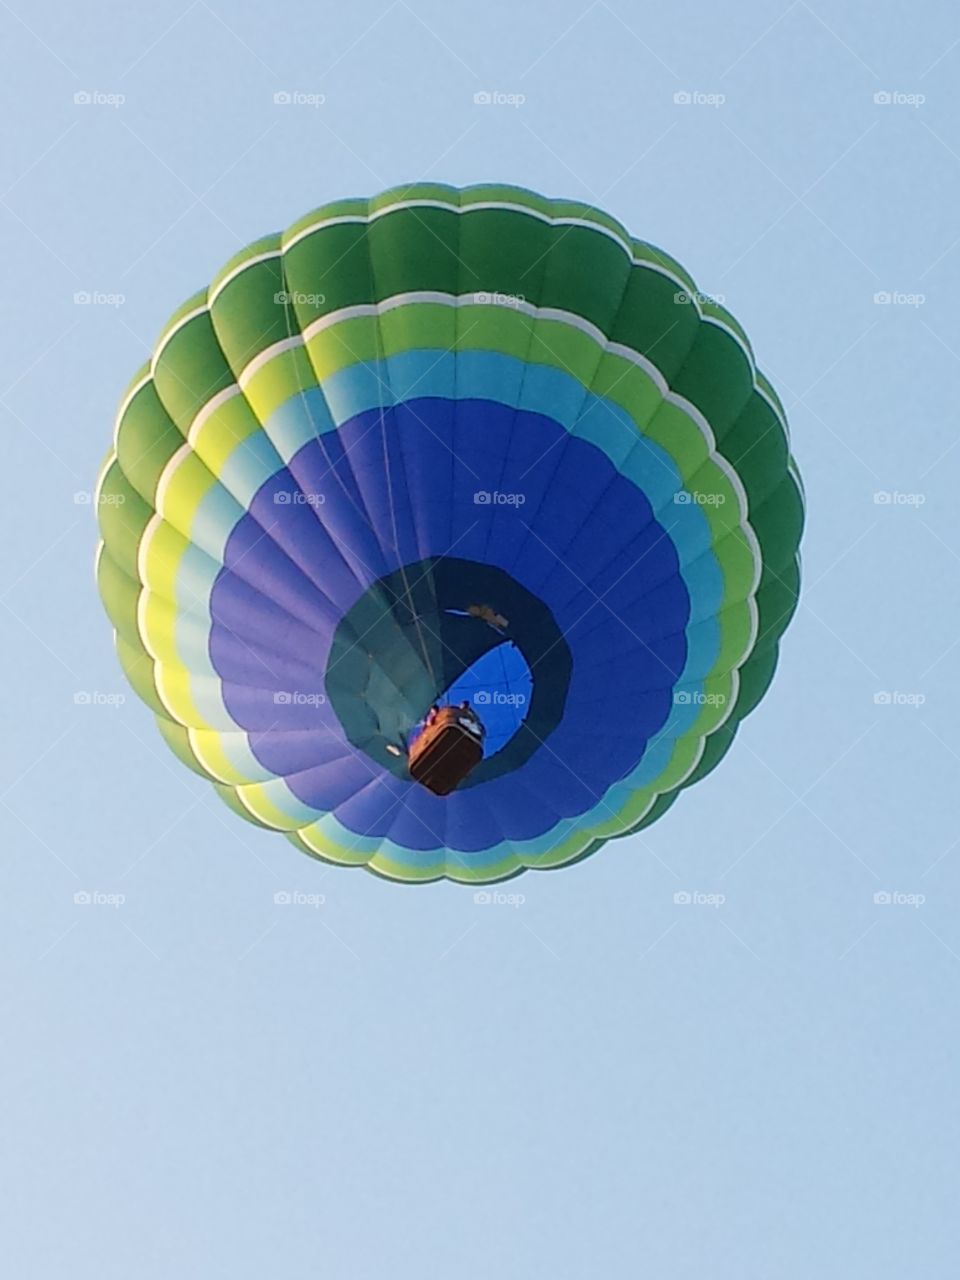 Hot air balloon against clear sky